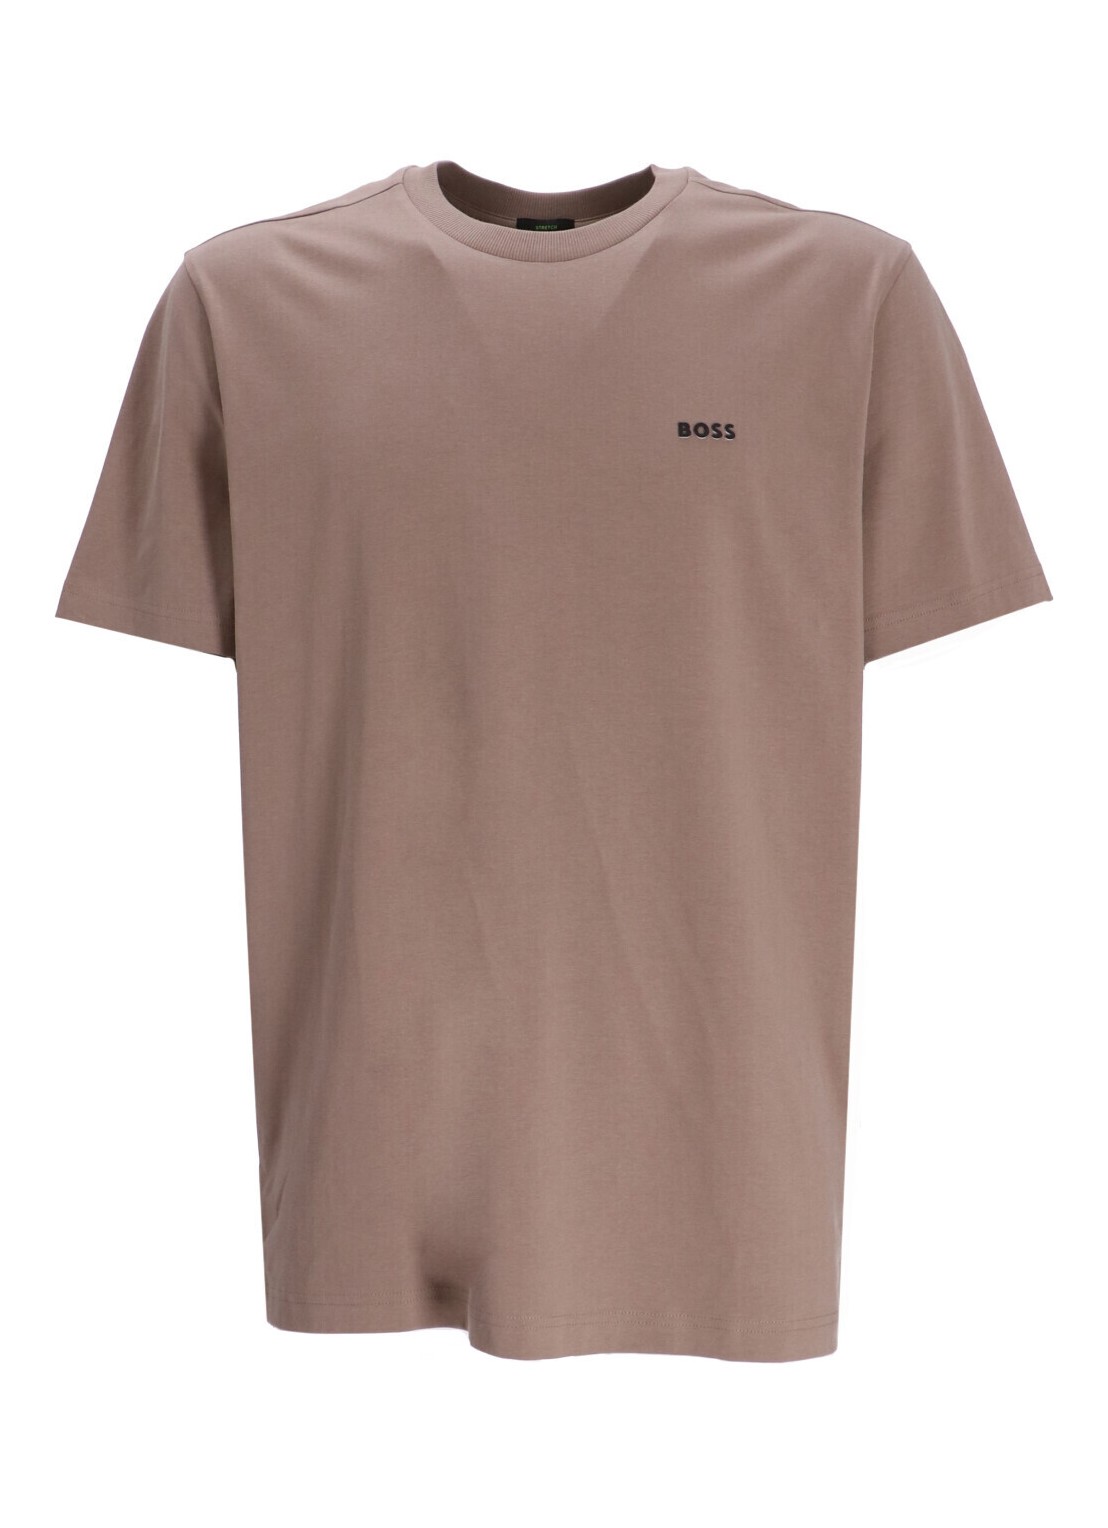 Camiseta boss t-shirt mantee - 50506373 334 talla XXL
 